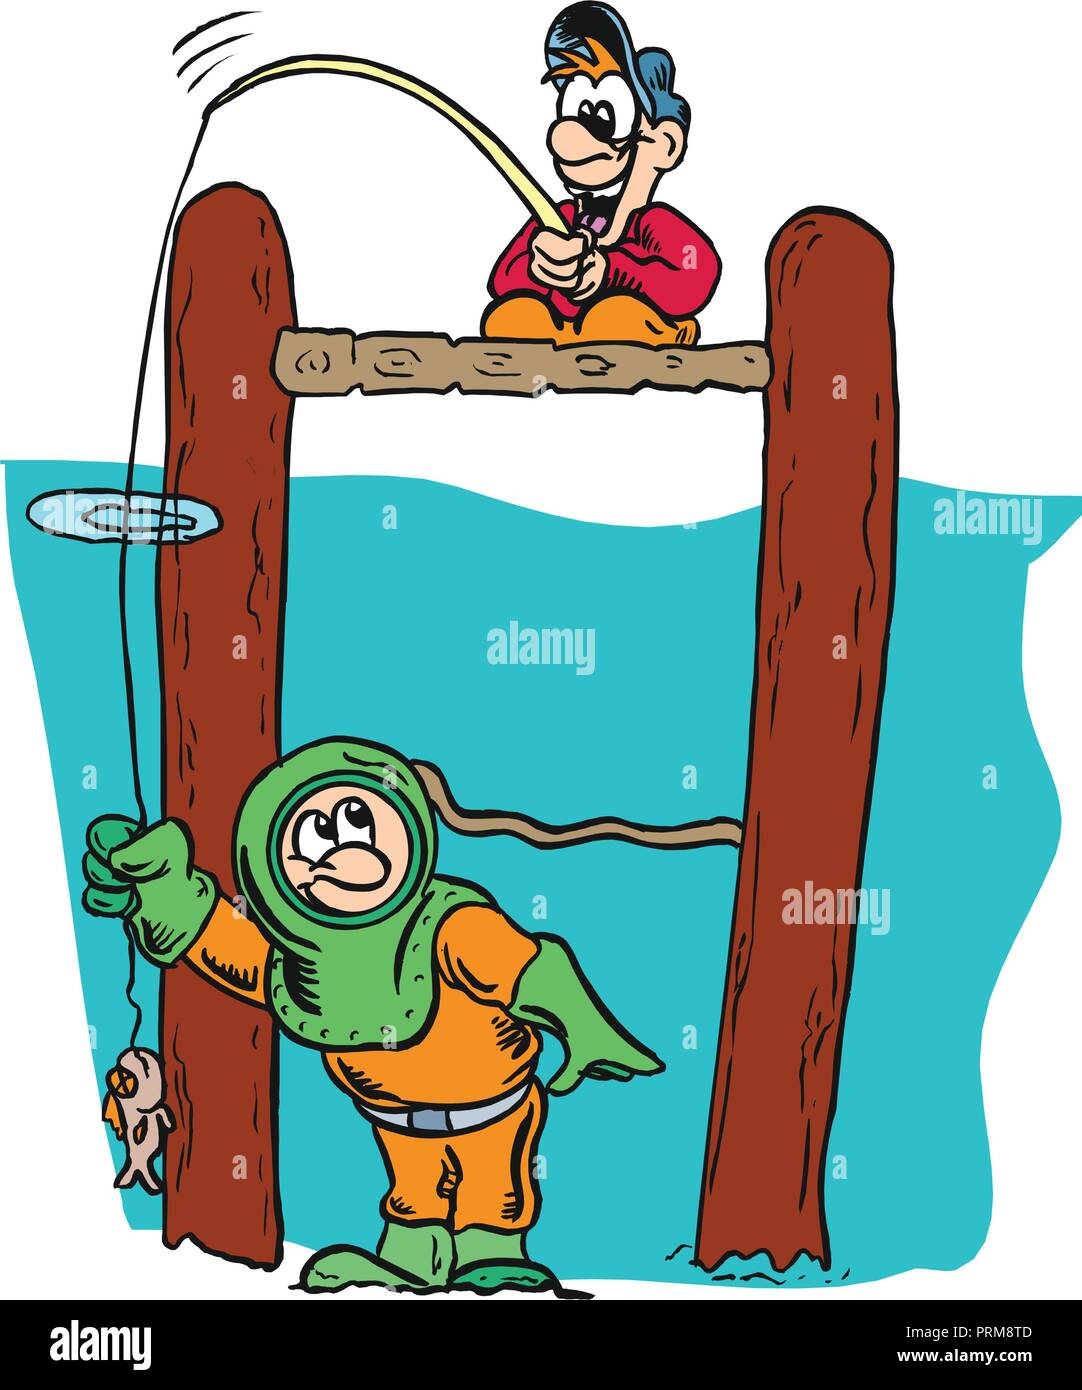 Divertidos dibujos animados conceptual acerca de alguien en un mar de  pesca. practico chistes Imagen Vector de stock - Alamy